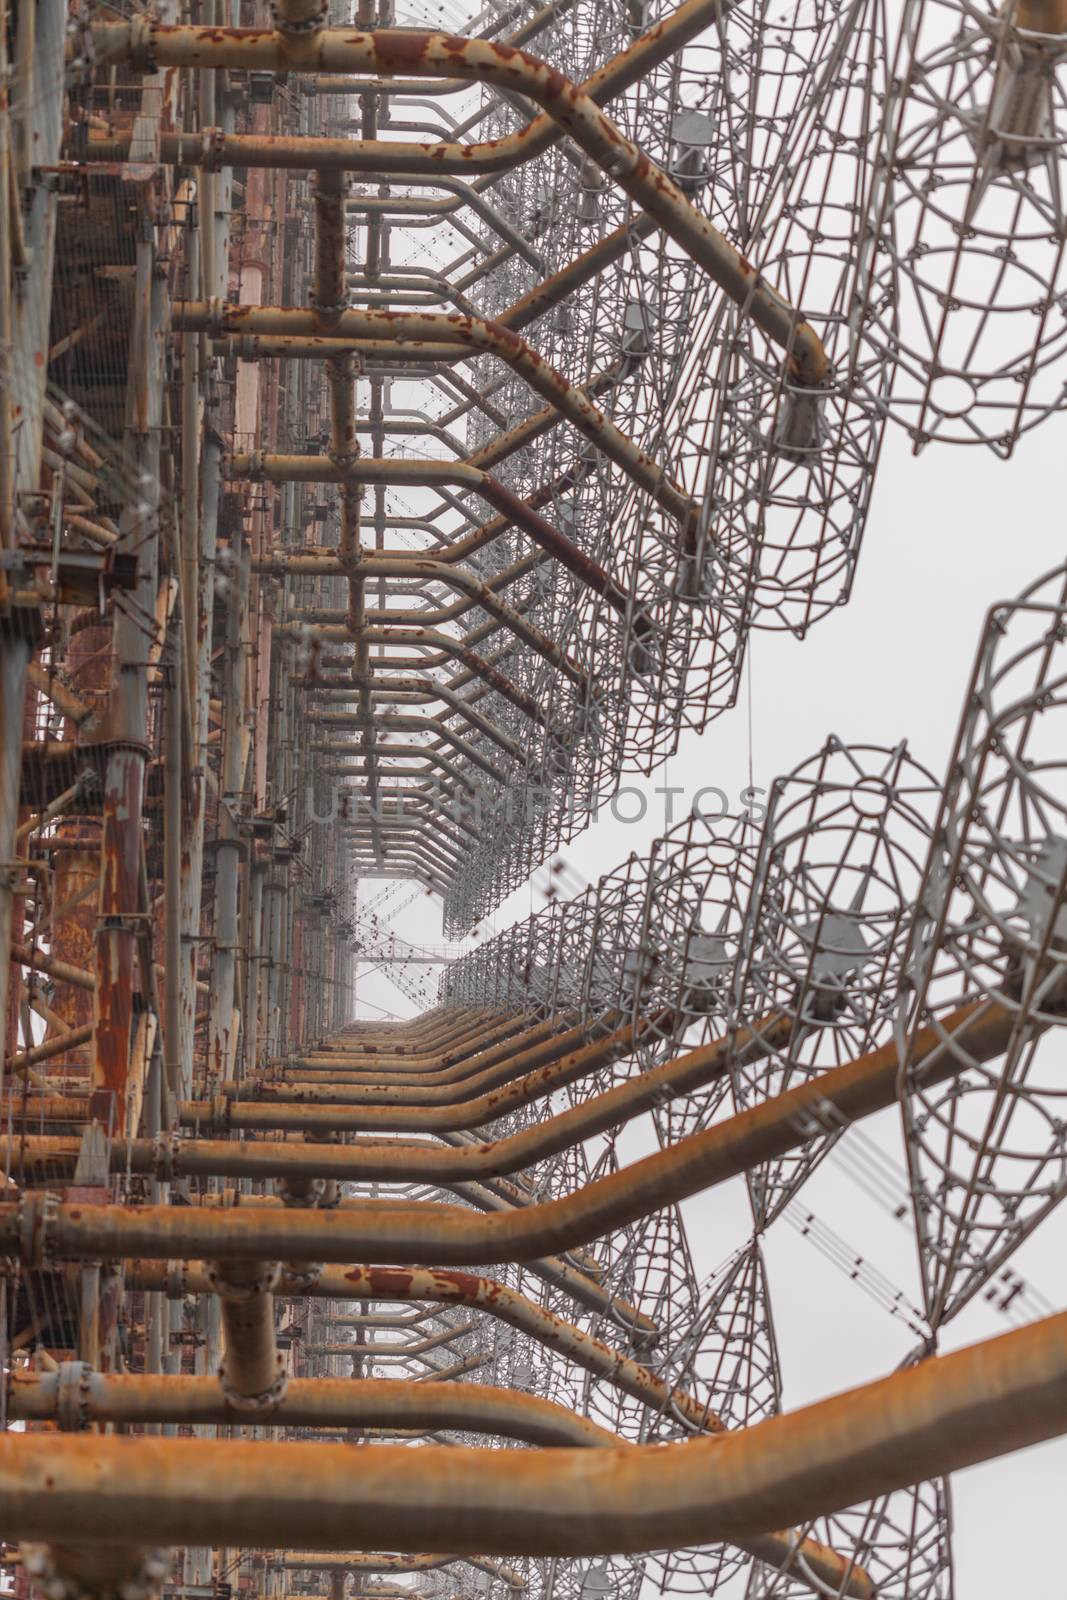 Soviet Radar System Duga near Chernobyl Nuclear Power Plant by igor_stramyk